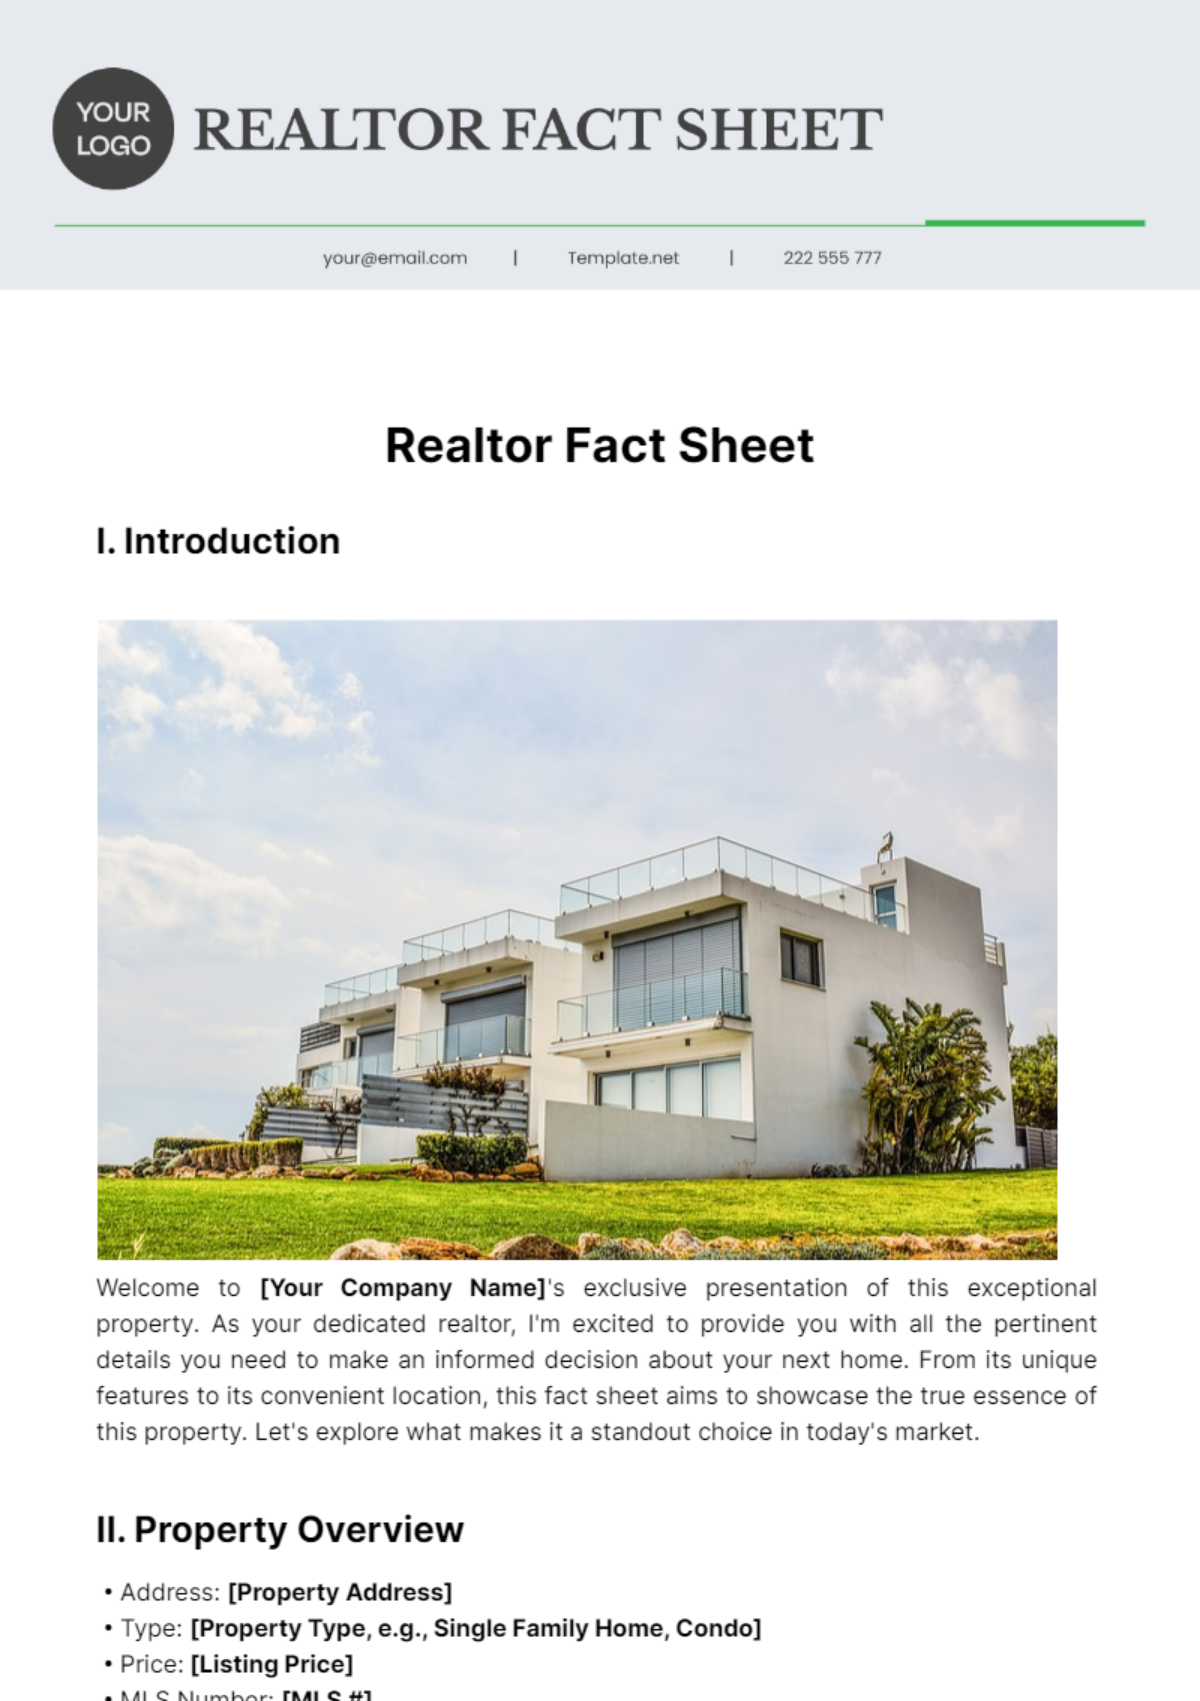 Realtor Fact Sheet Template